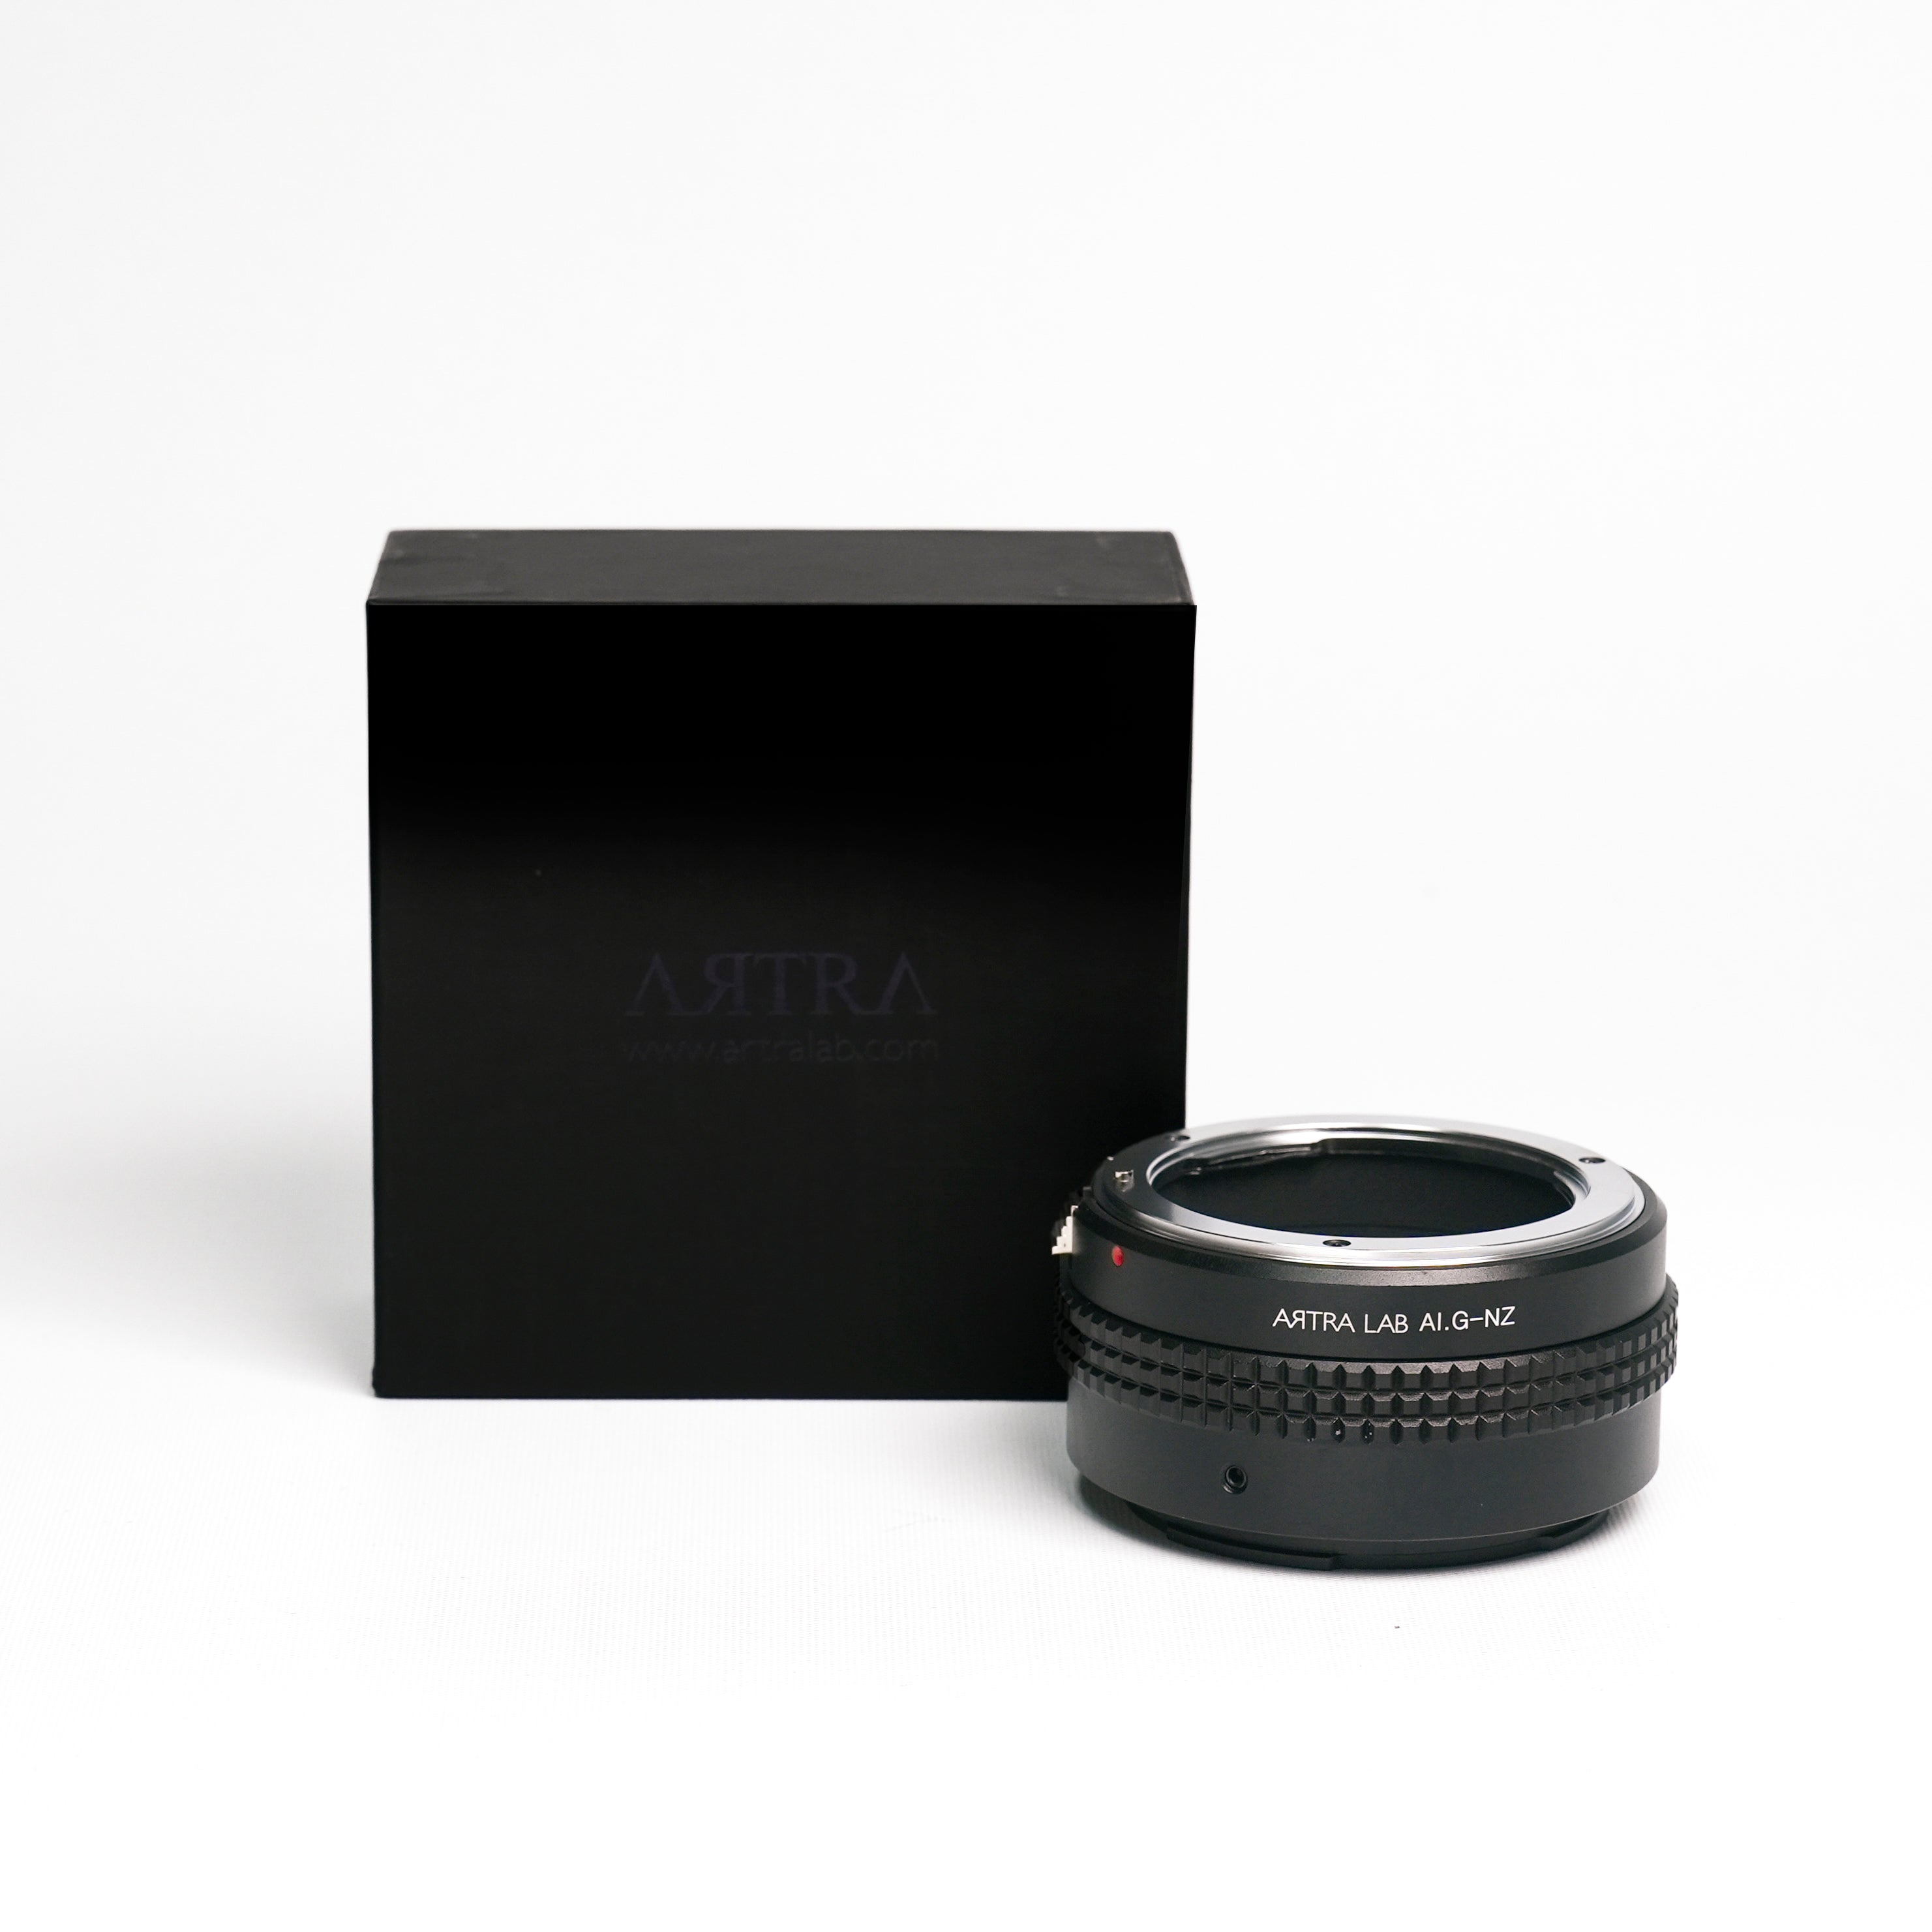 ARTRA LAB Nikon F Mount AI-G To Nikon Z Mount Camera Body Adapter